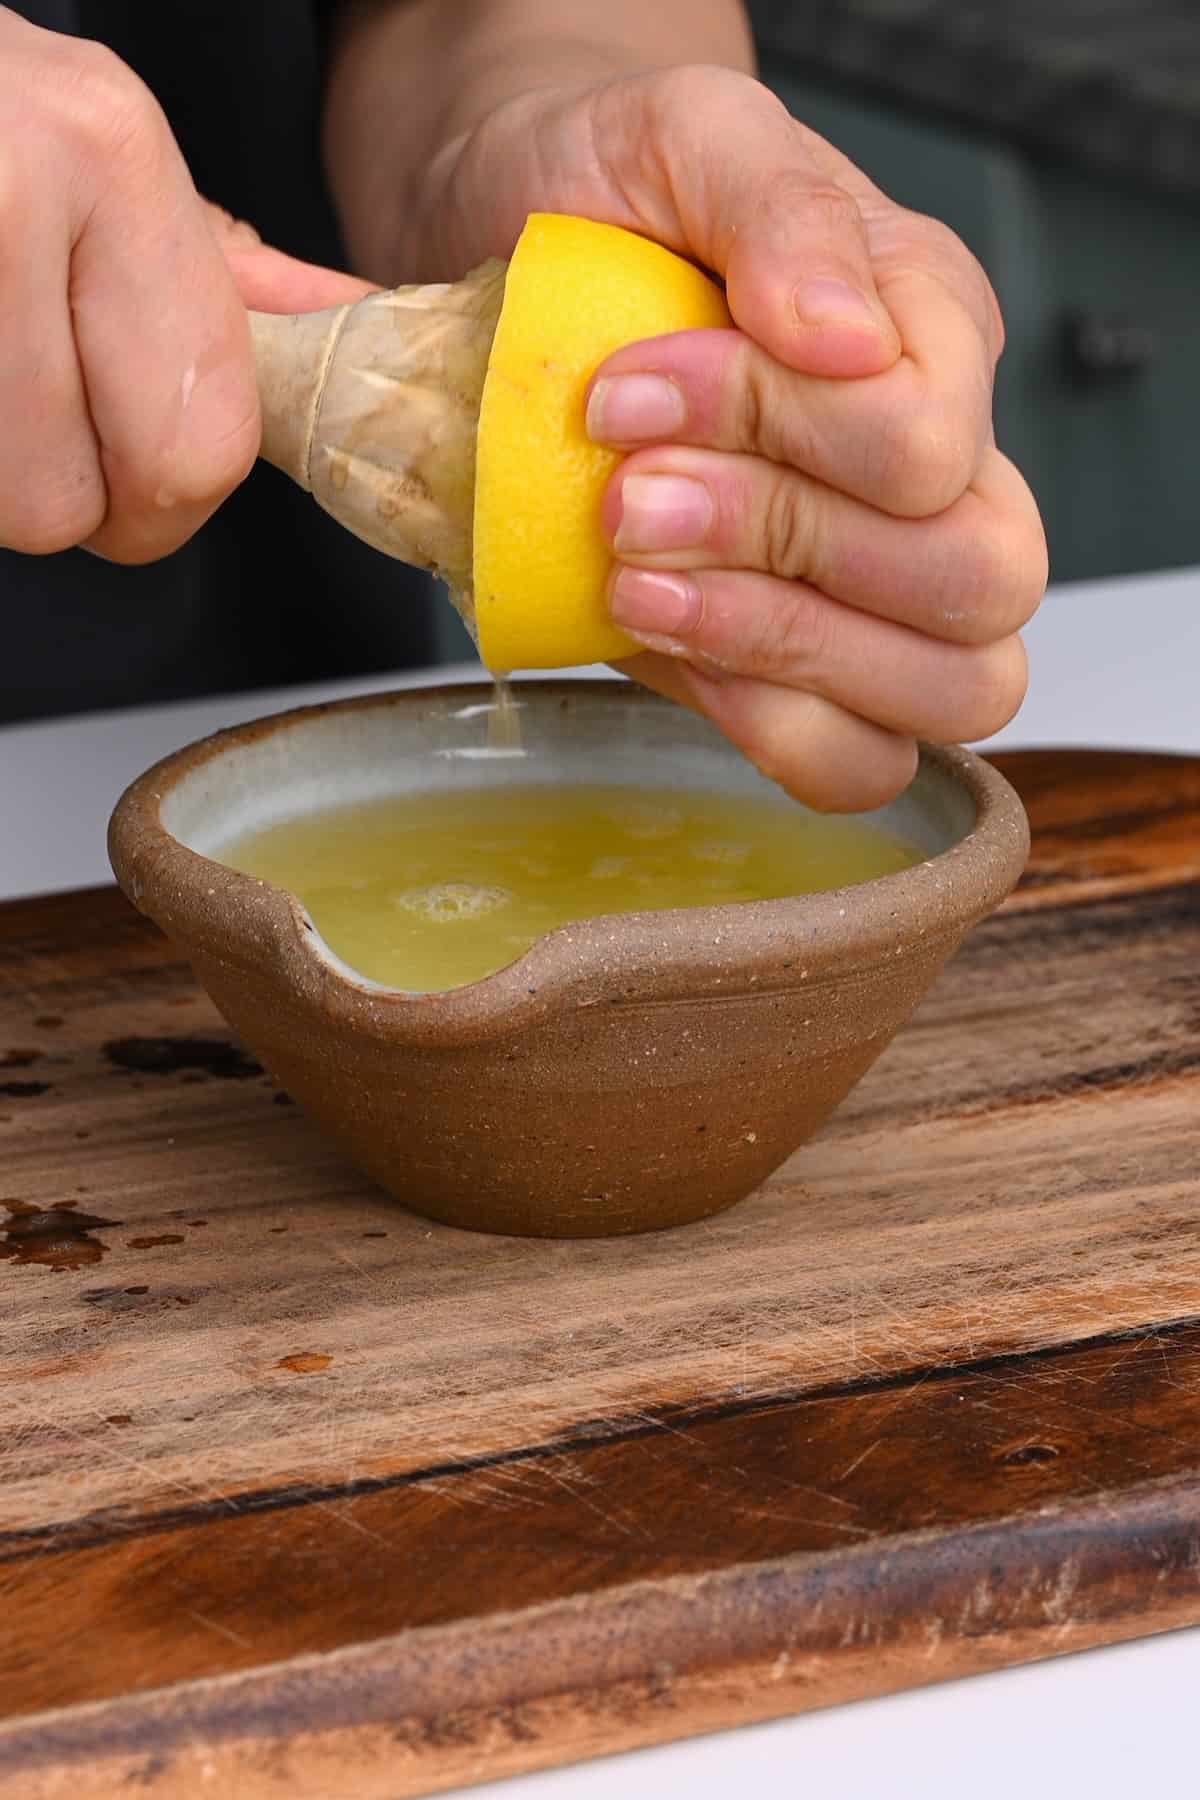 Manually juicing a lemon